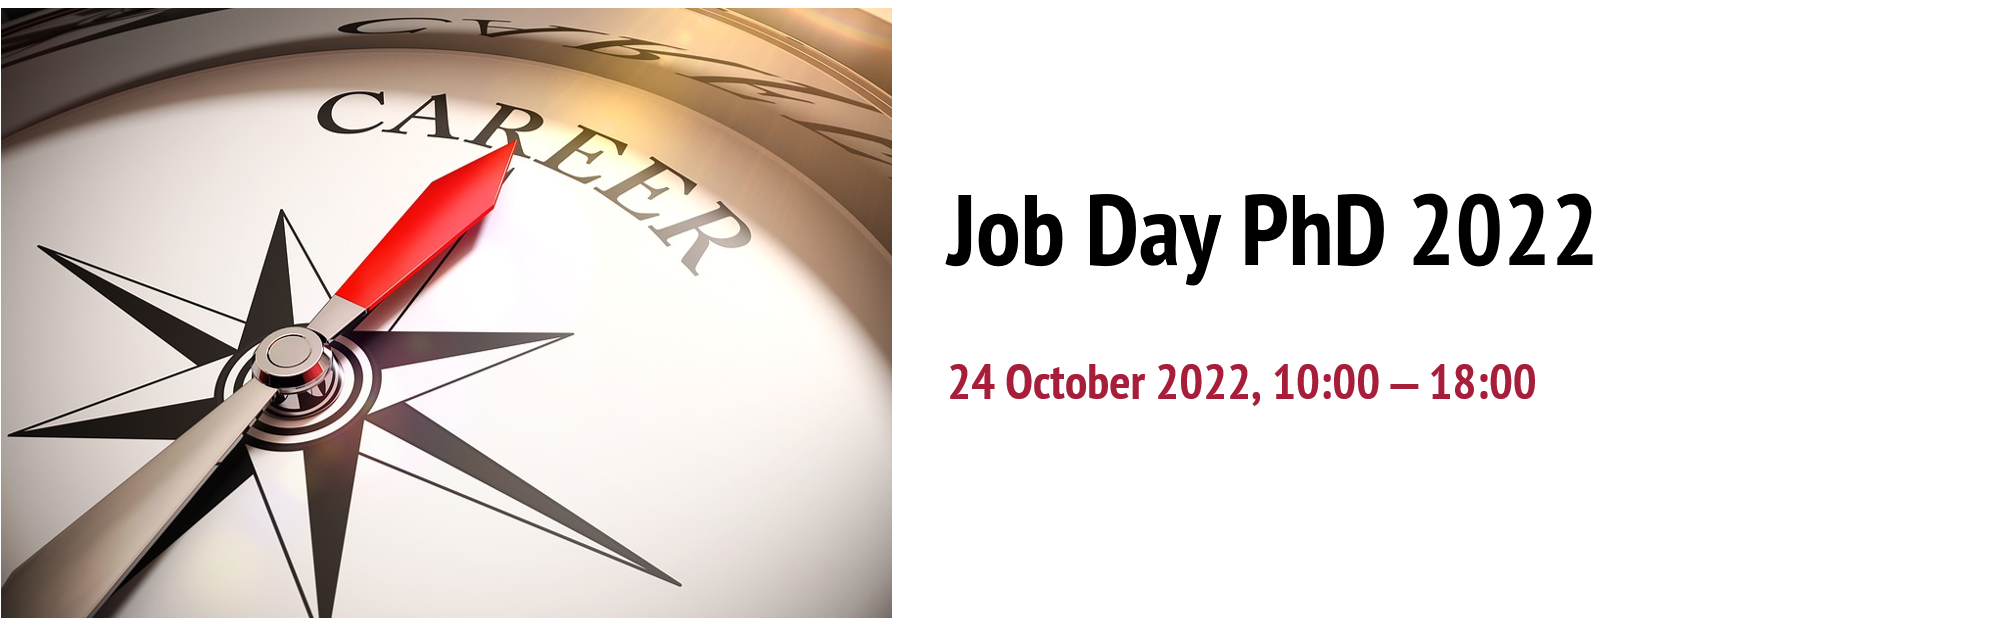 job day phd 2022 en